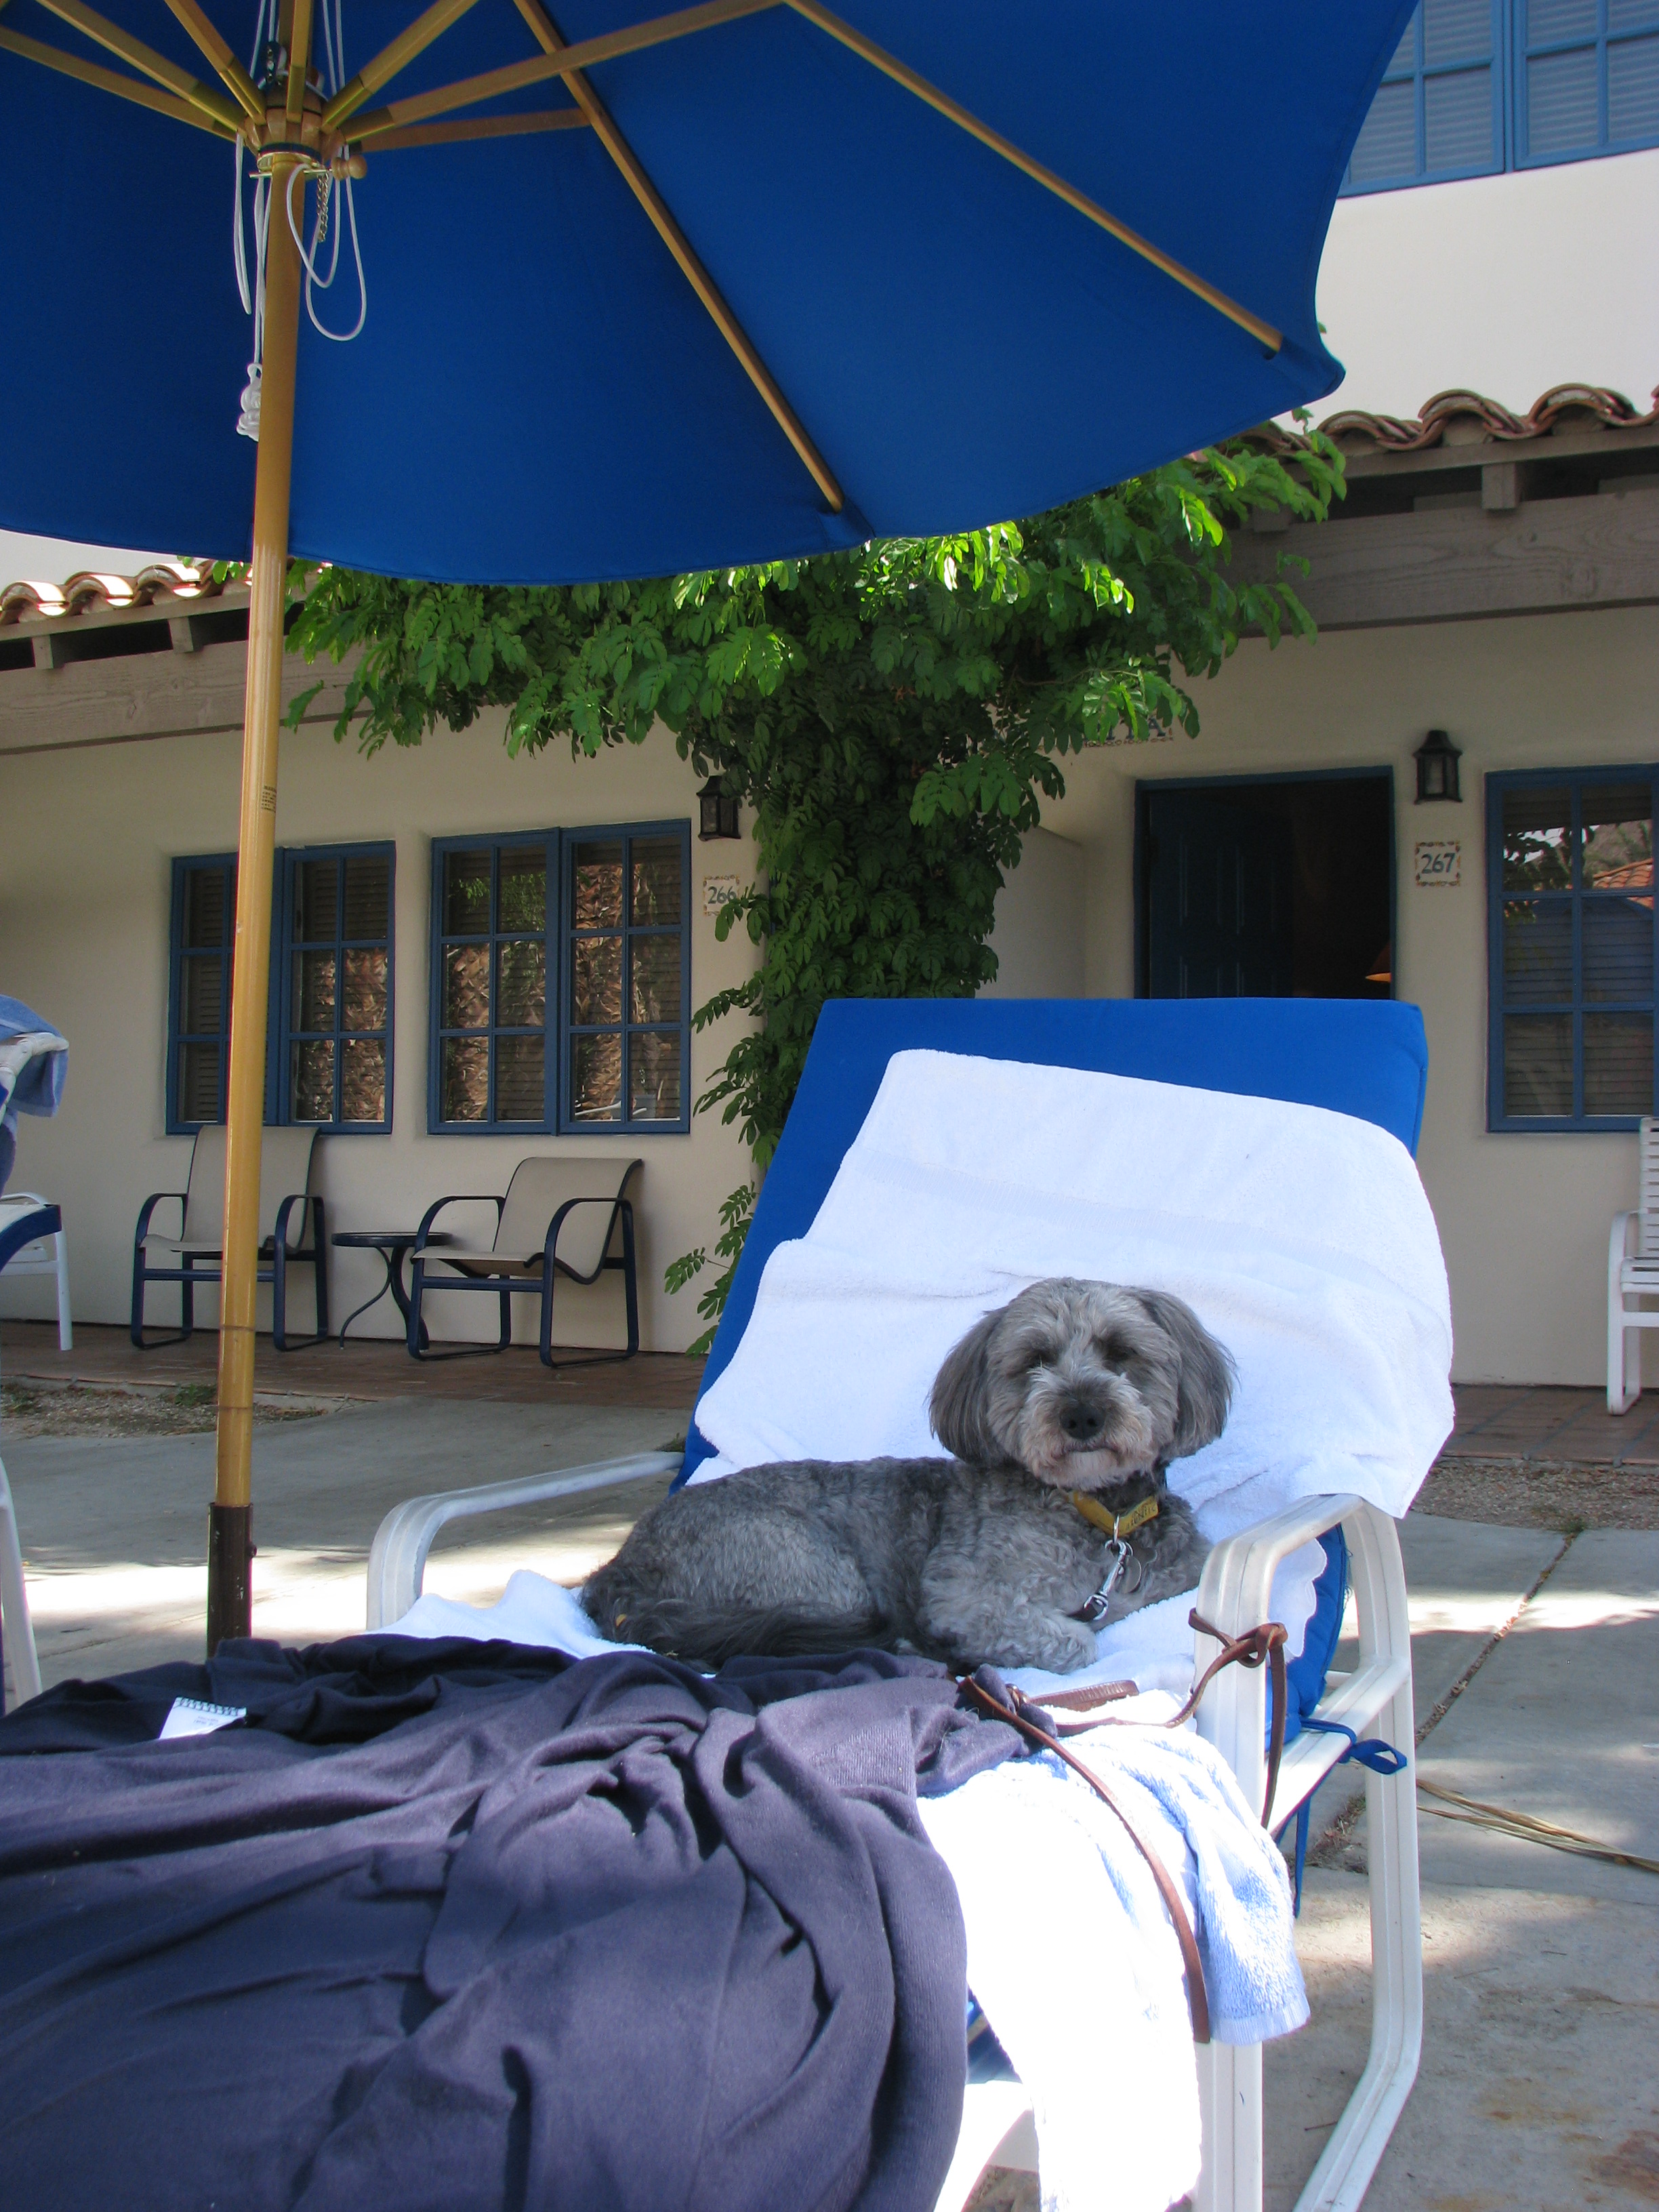 Even our dog loves La Quinta.